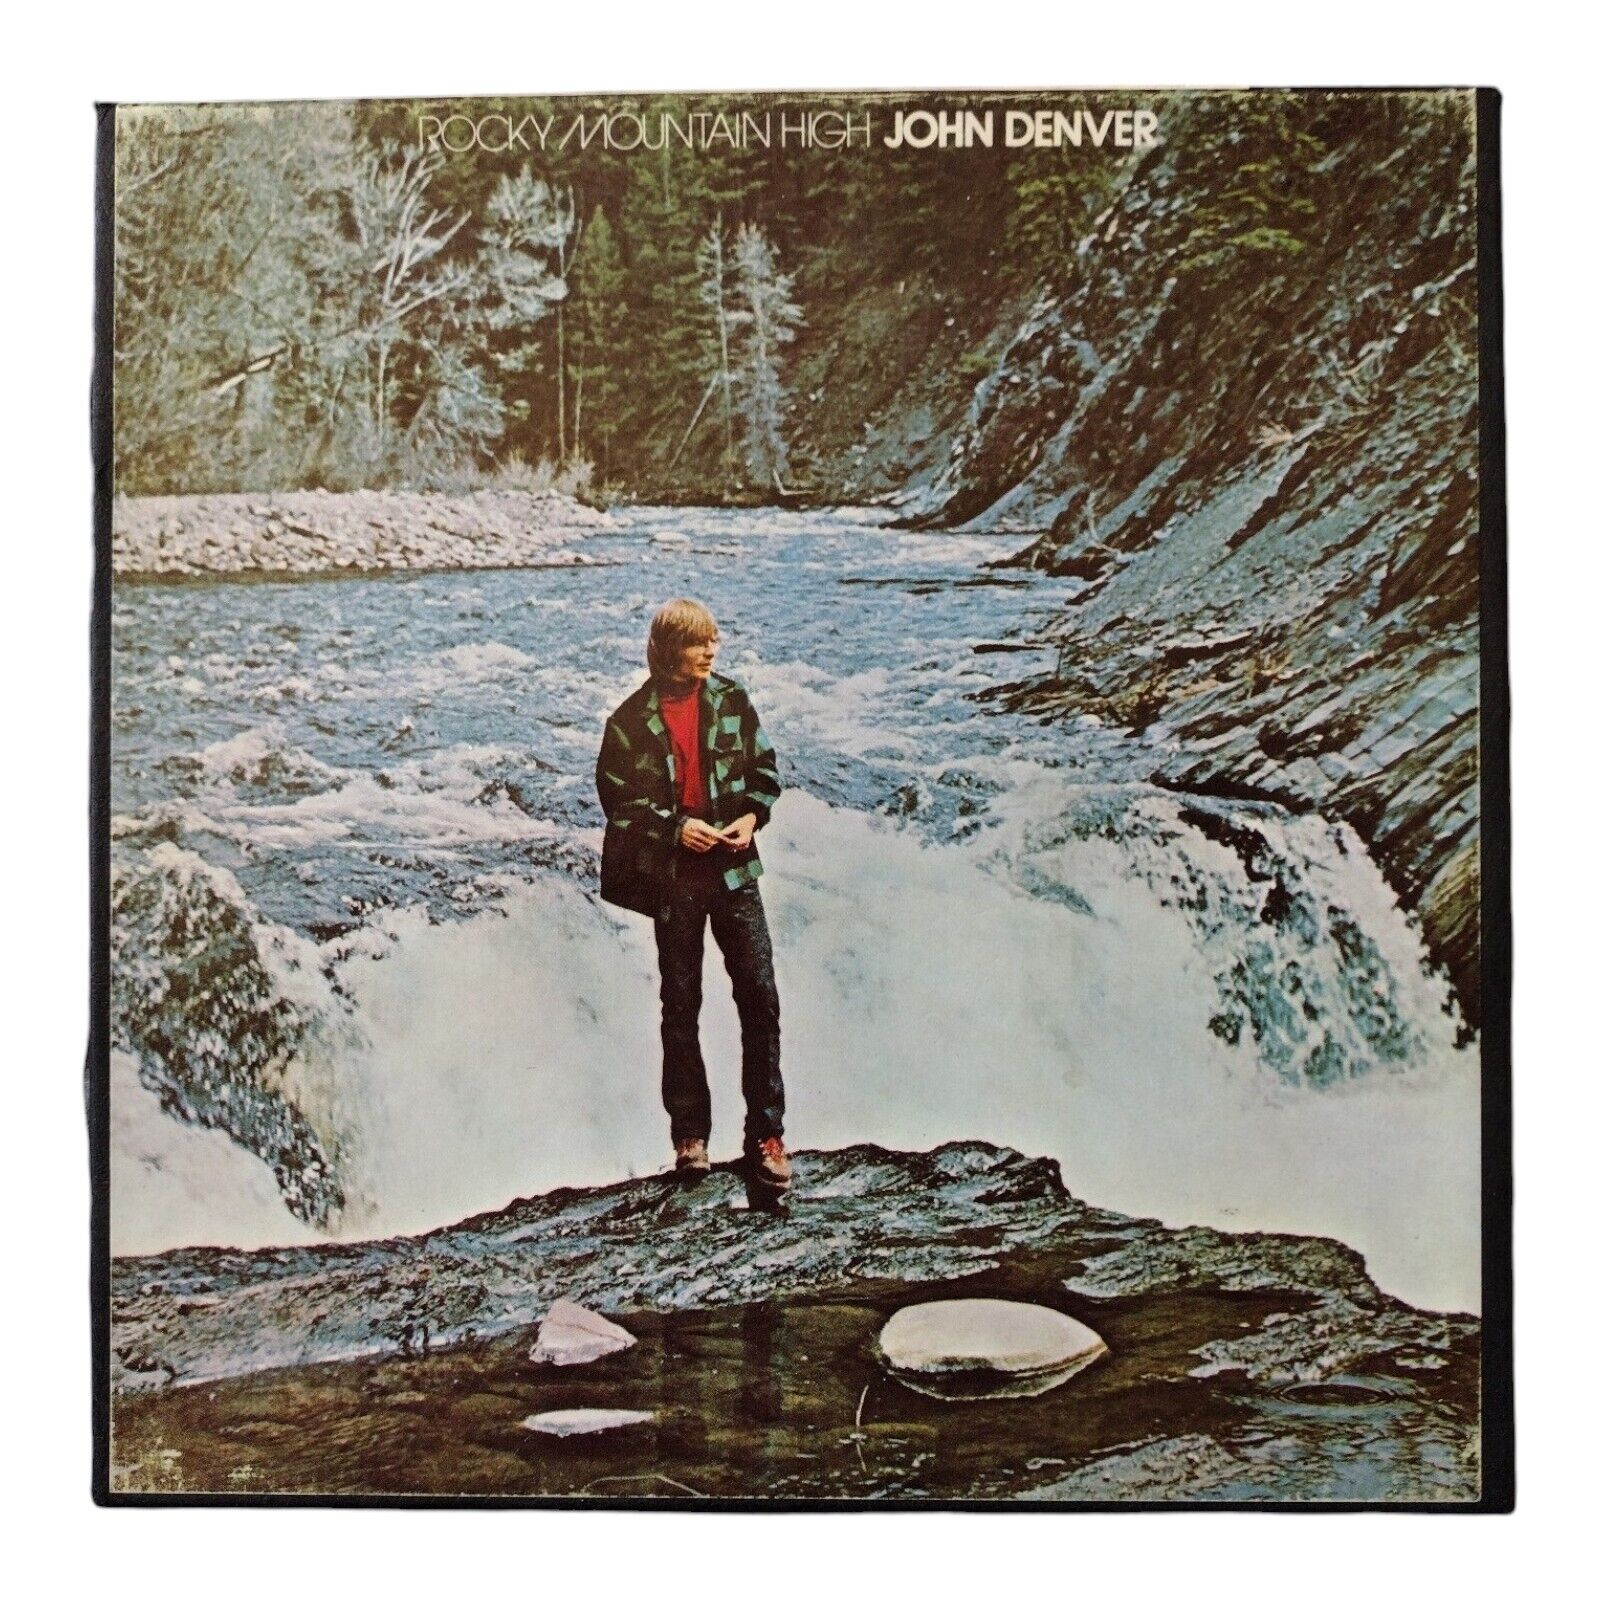 John Denver Rocky Mountain High Reel to Reel Vintage Music Tape 1972 4 Track